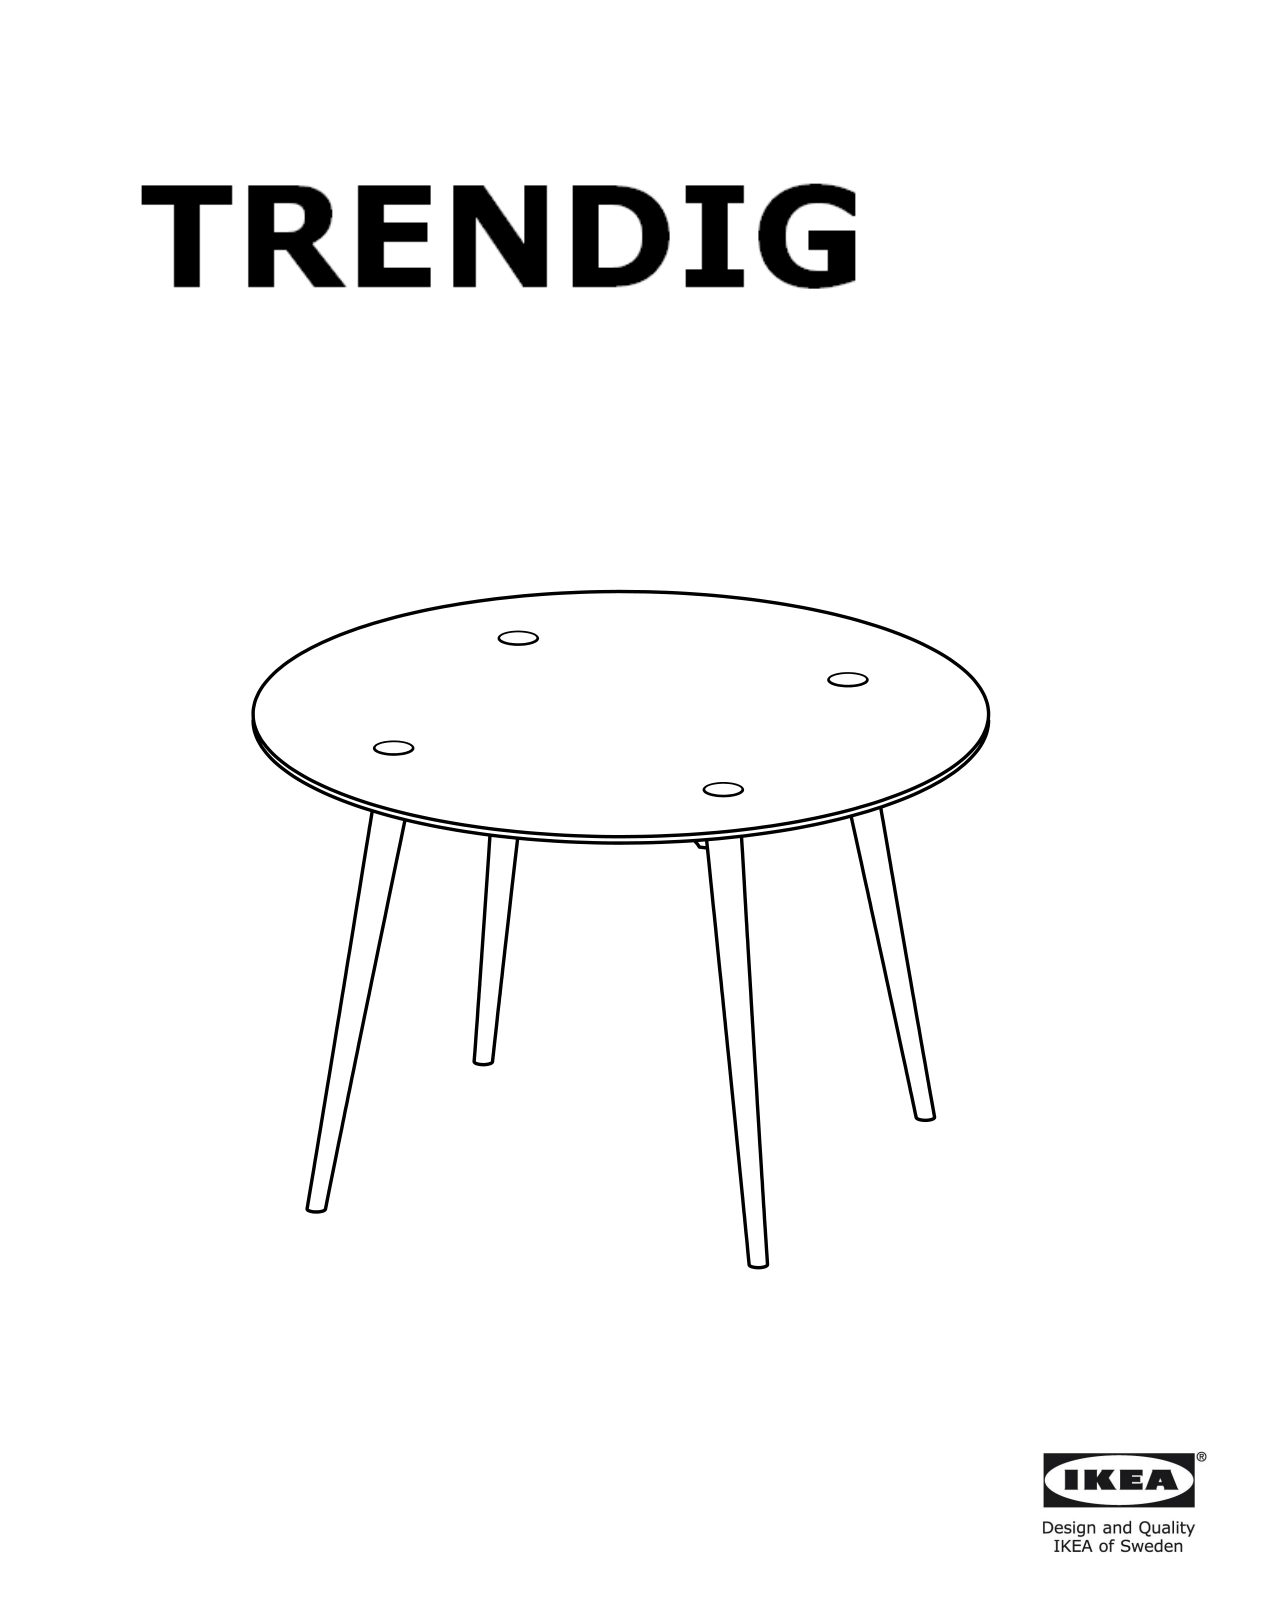 IKEA TRENDIG 2013 Dining table User Manual